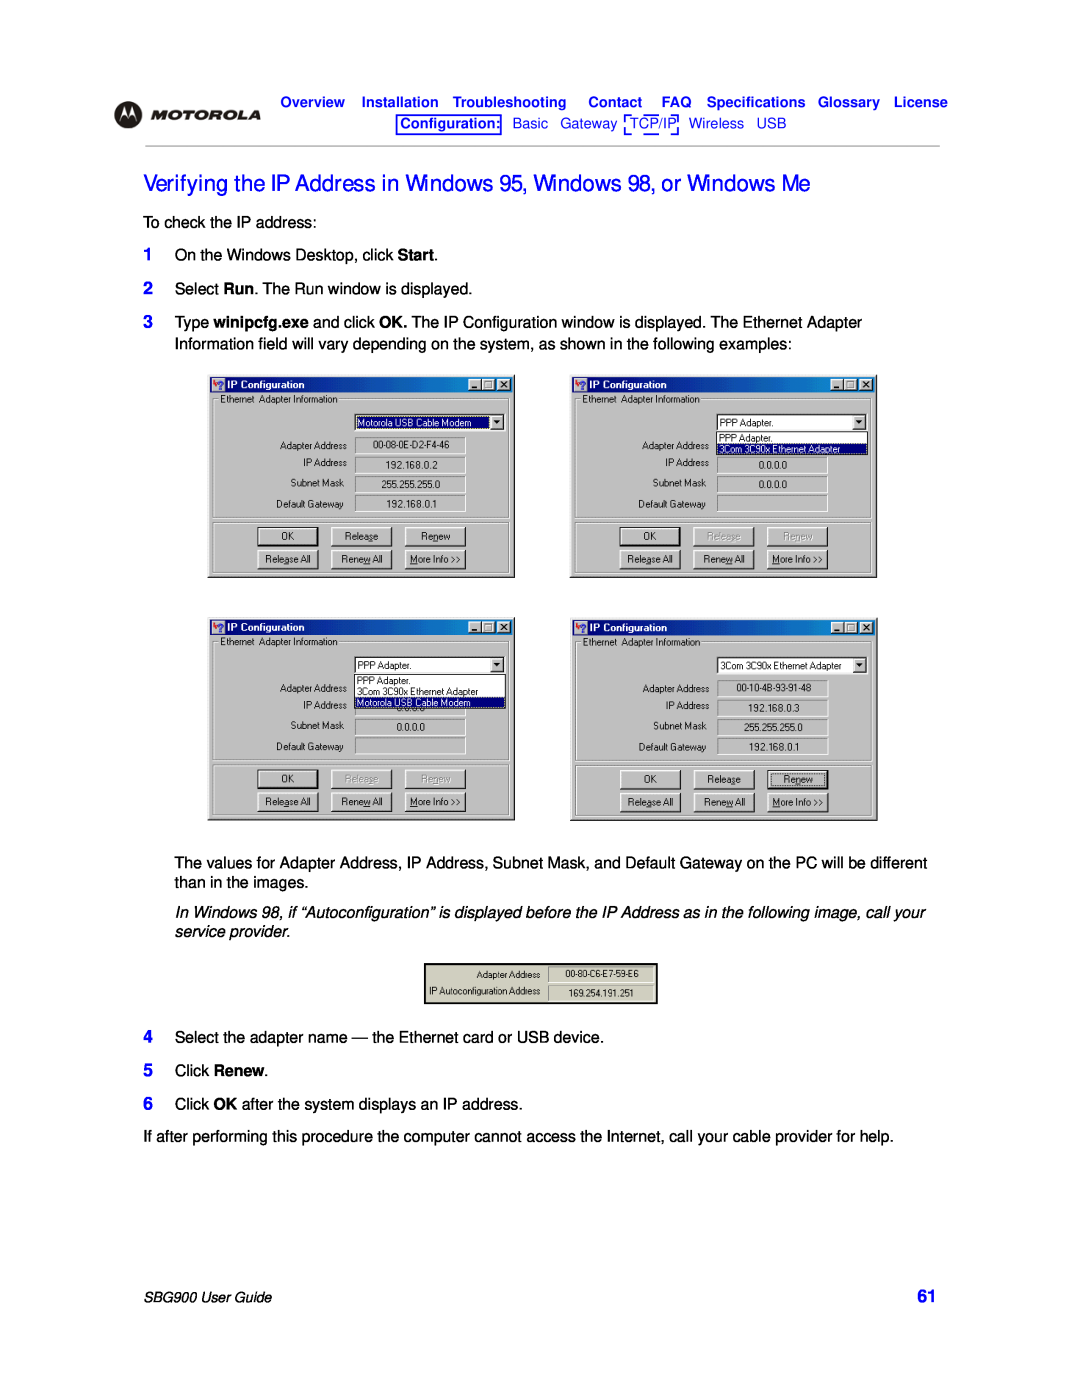 Motorola SBG900 manual Verifying the IP Address in Windows 95, Windows 98, or Windows Me 